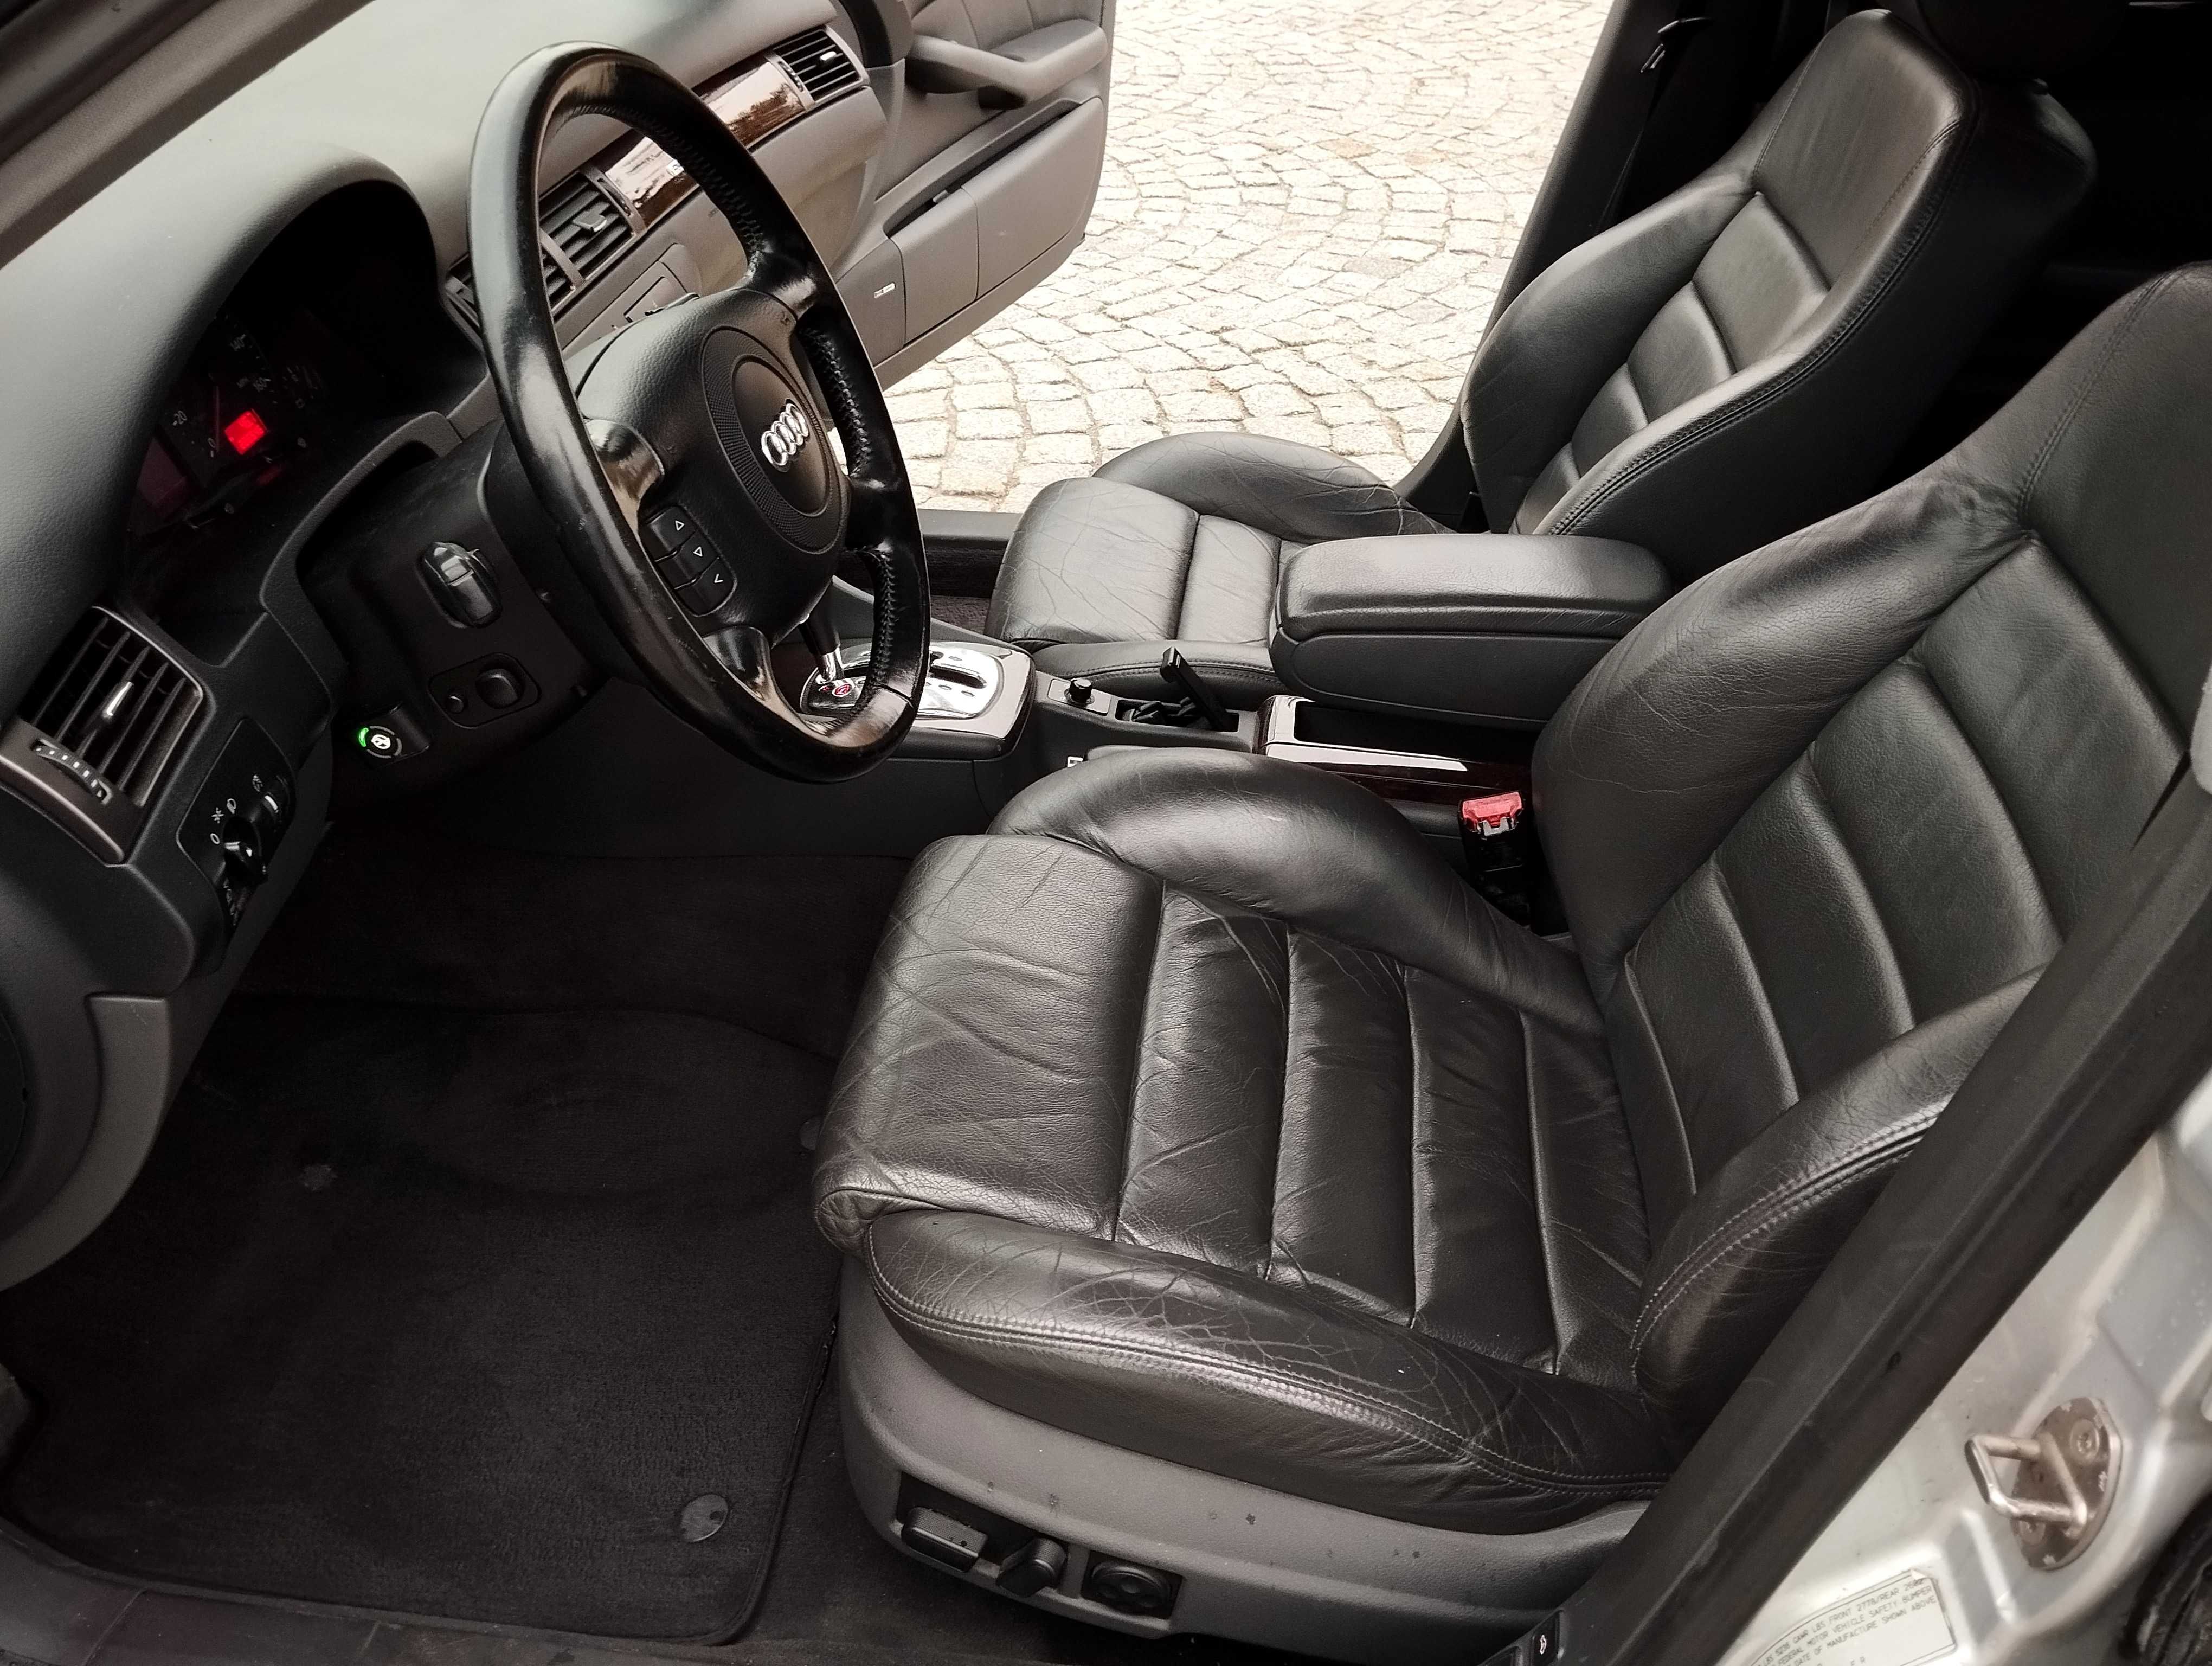 Audi A6 4.2 V8 300KM + gaz LPG, quattro, skóra, xenon, alu 19